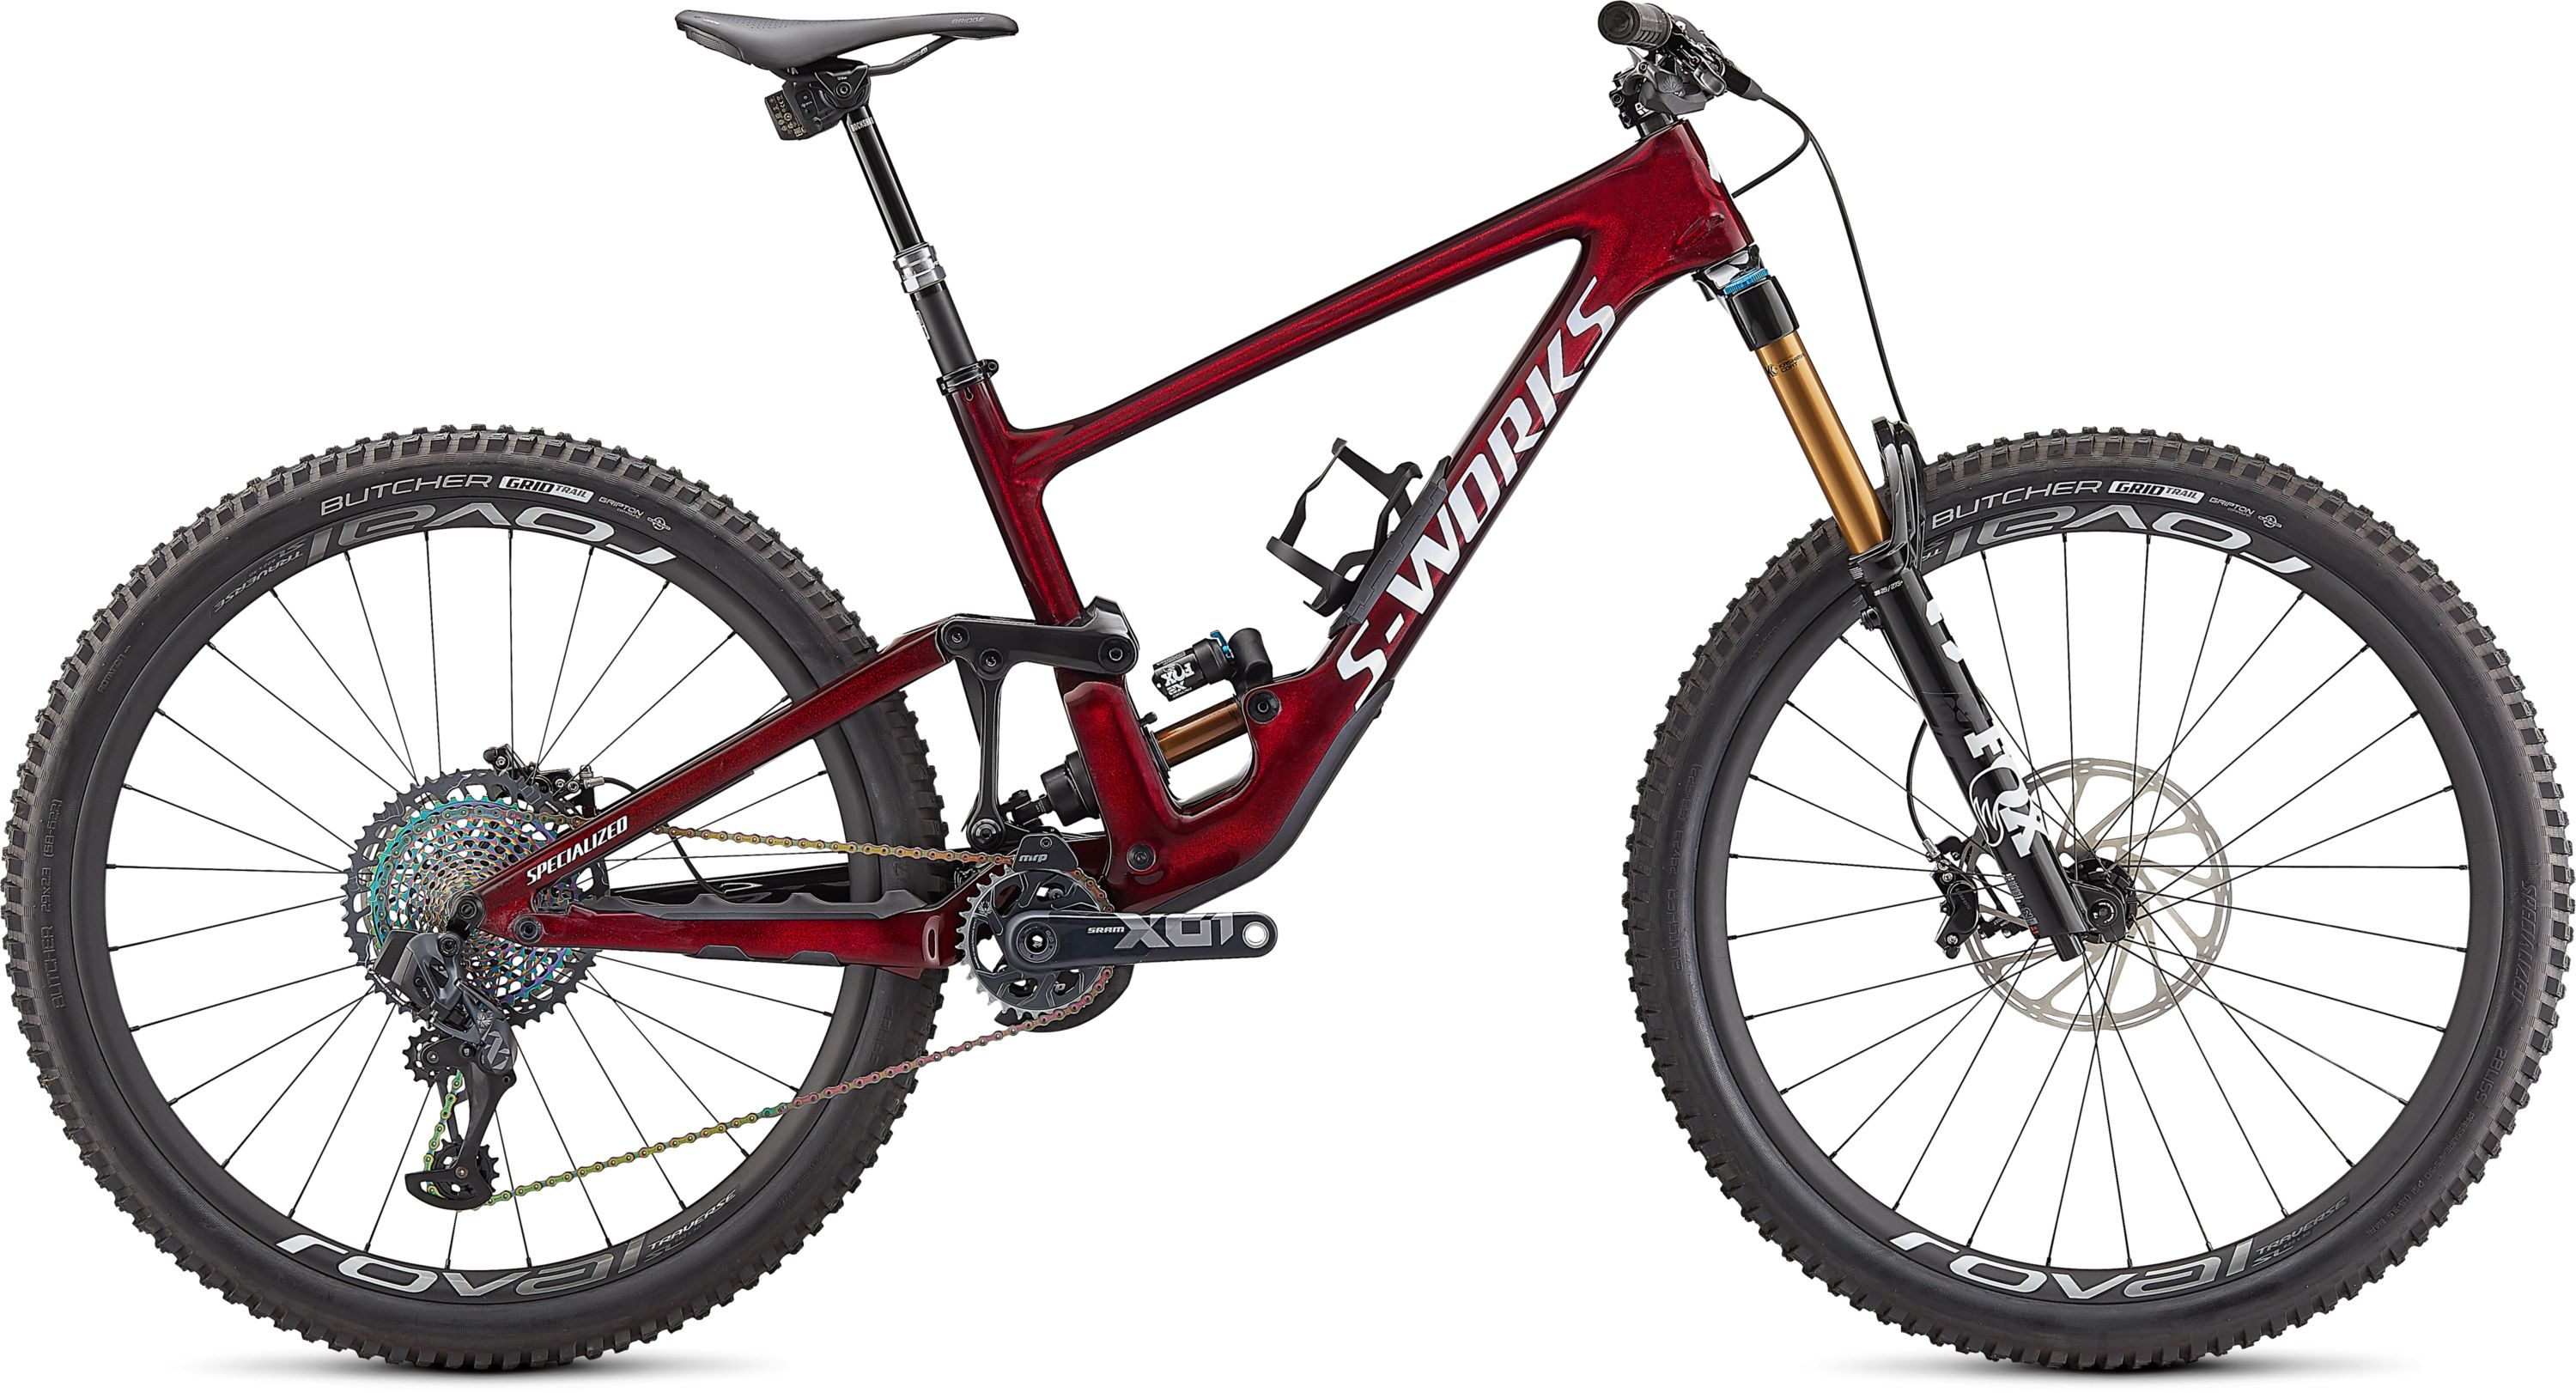 Specialized S Works Enduro Carbon 29er Mountain Bike 2021 £11500